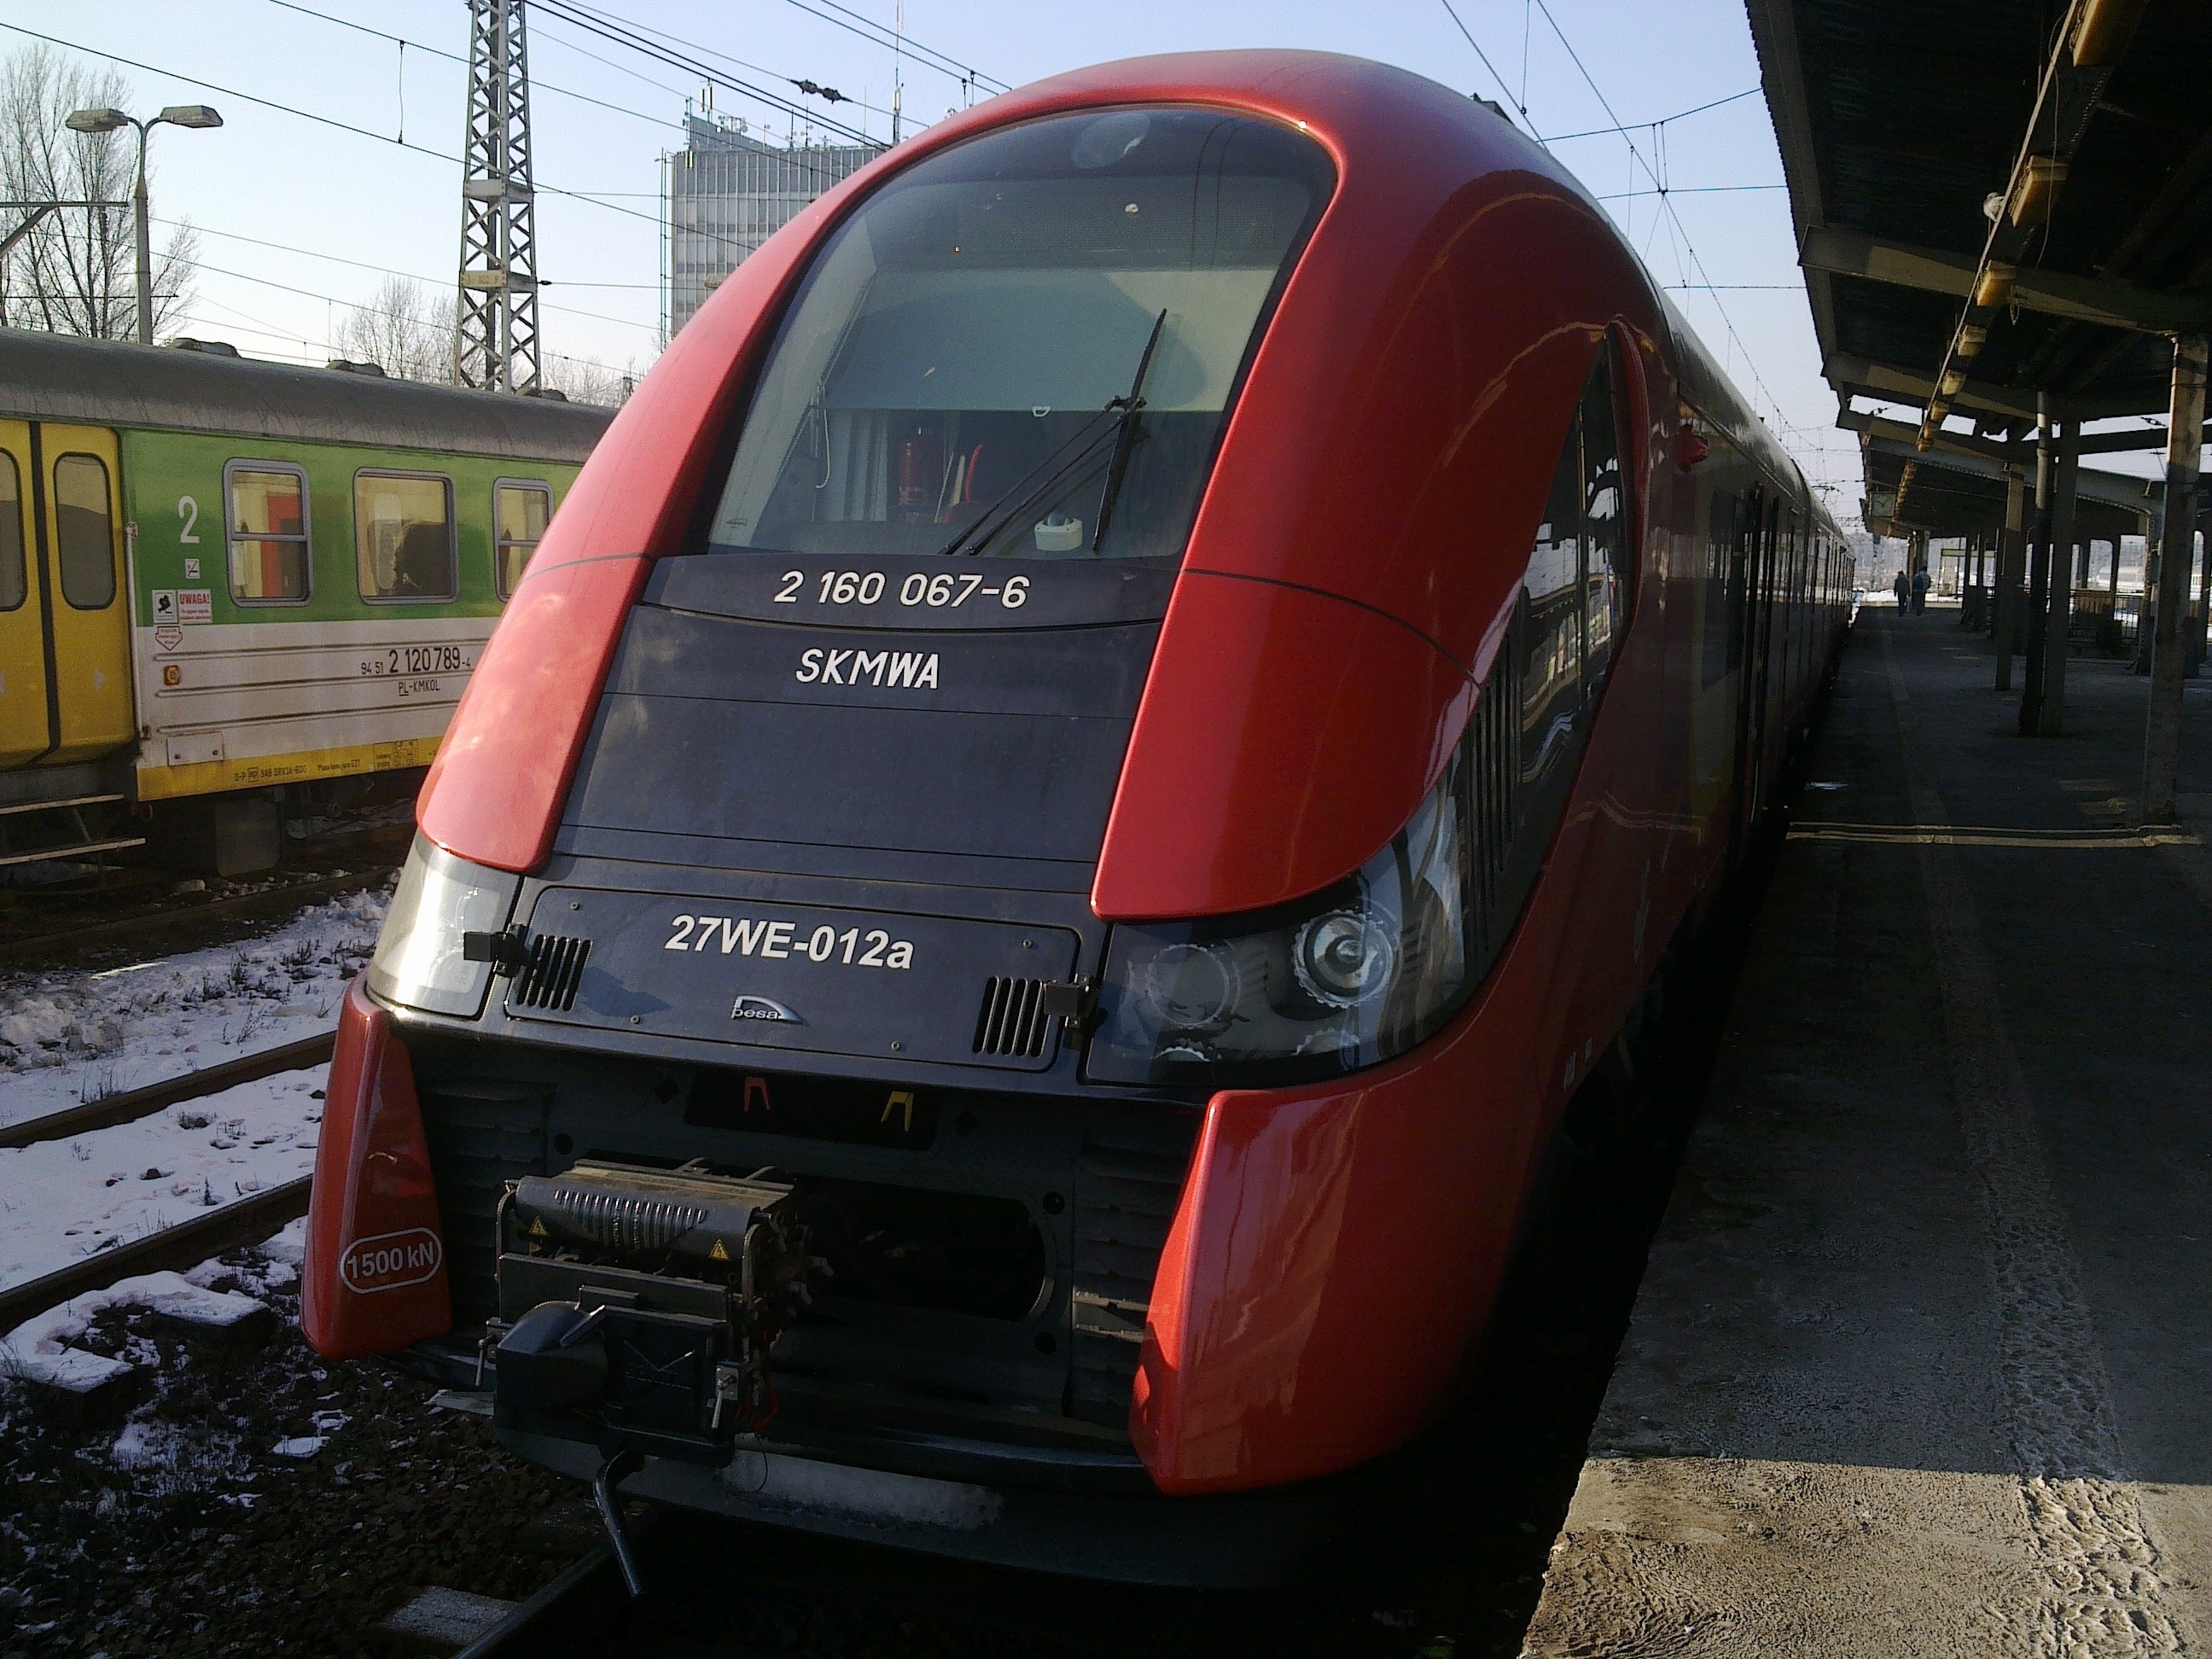 red and black skmwa train